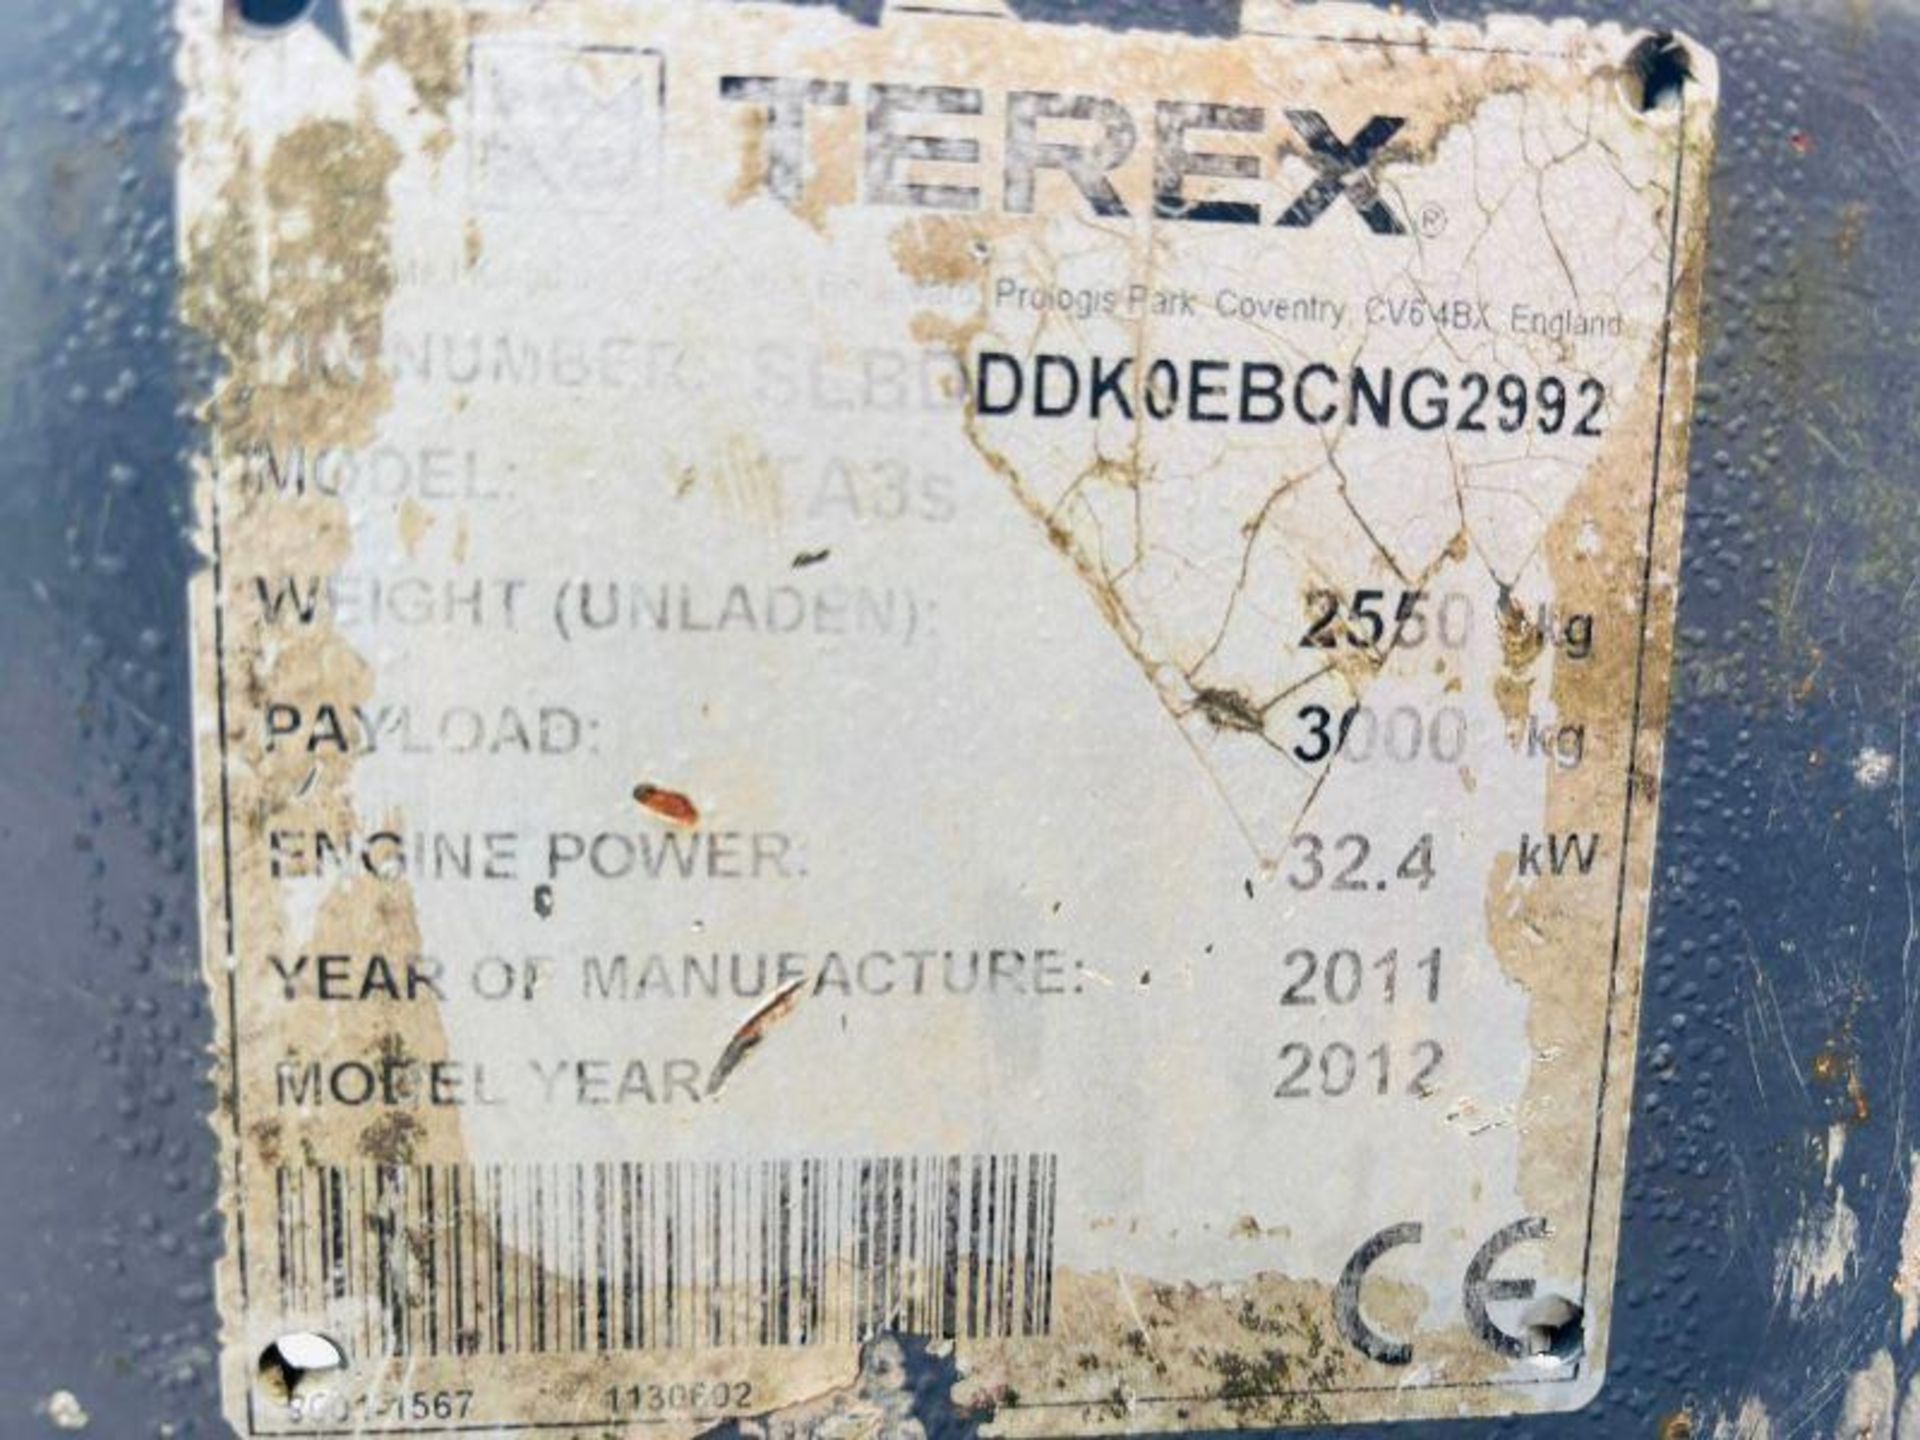 TEREX TA3 4WD SWIVEL TIP DUMPER *YEAR 2012, 1422 HOURS* C/W KUBOTA ENGINE - Image 6 of 15